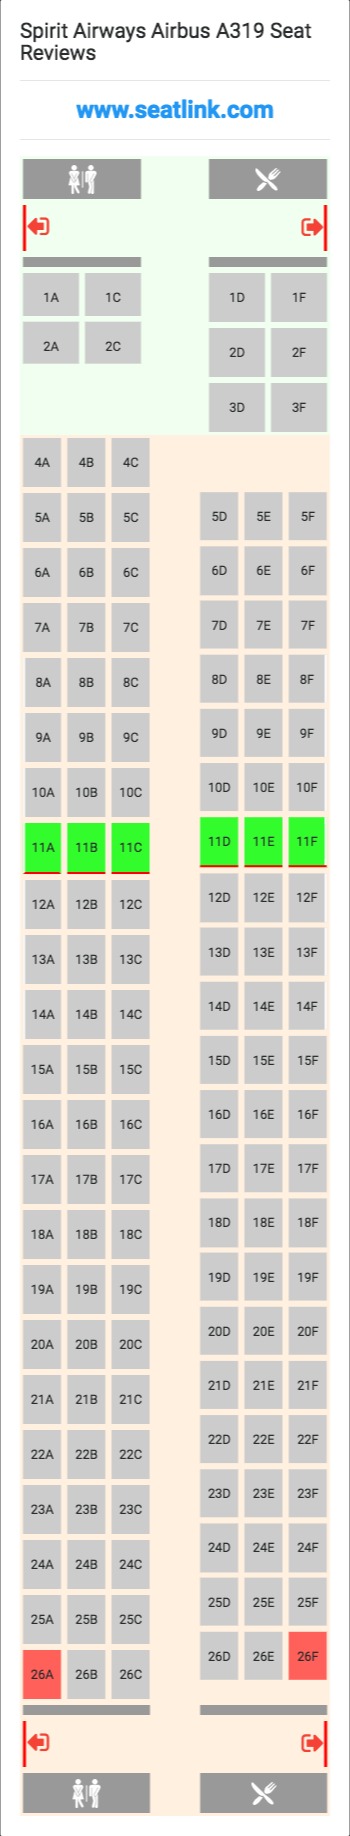 Alitalia Airbus A319 Seating Chart